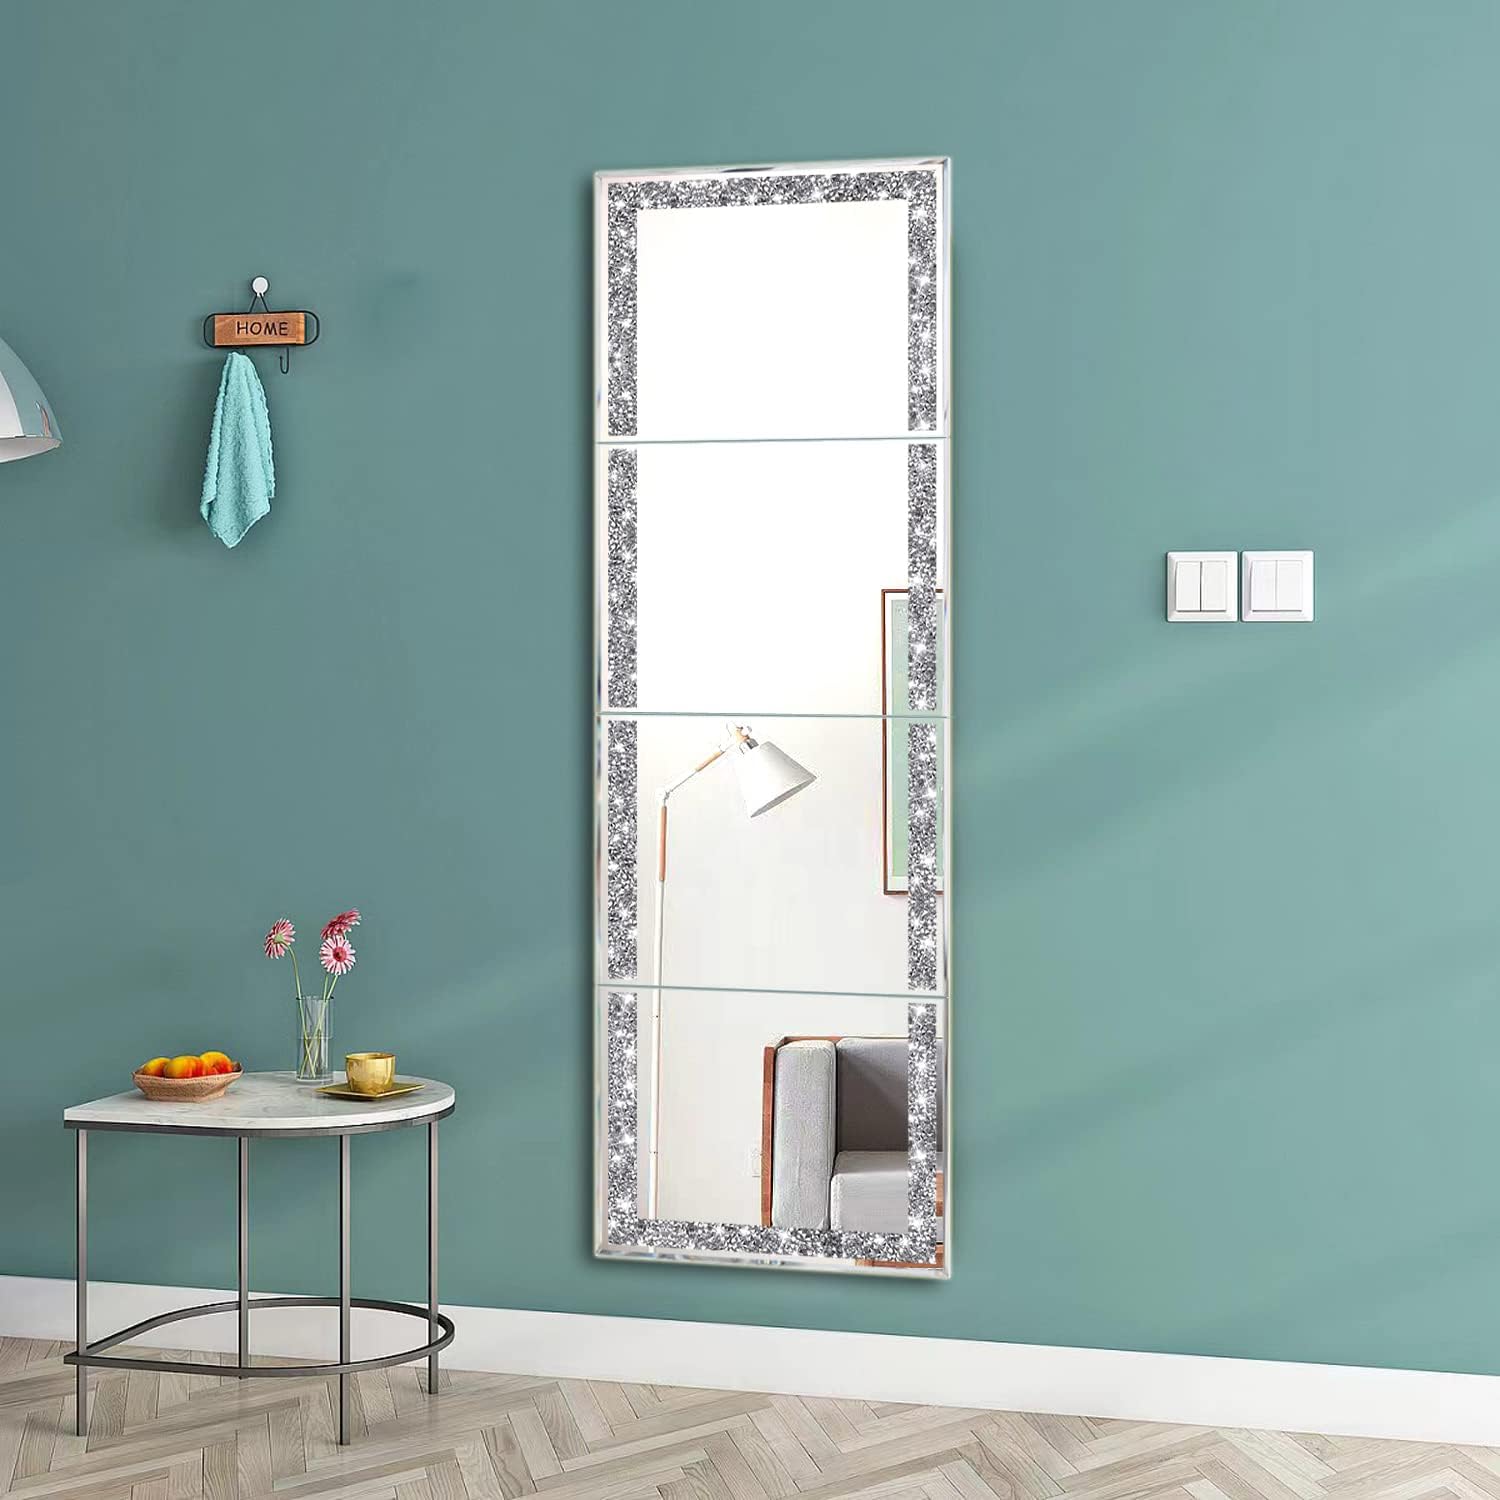 Full Length Mirror Tiles,Crystal Crush Diamond Full Body Wall Mirror,14''x11'' 4PCS Glass Frameless Make Up Mirror for Home Decor,Room Decor,Wall Decor.